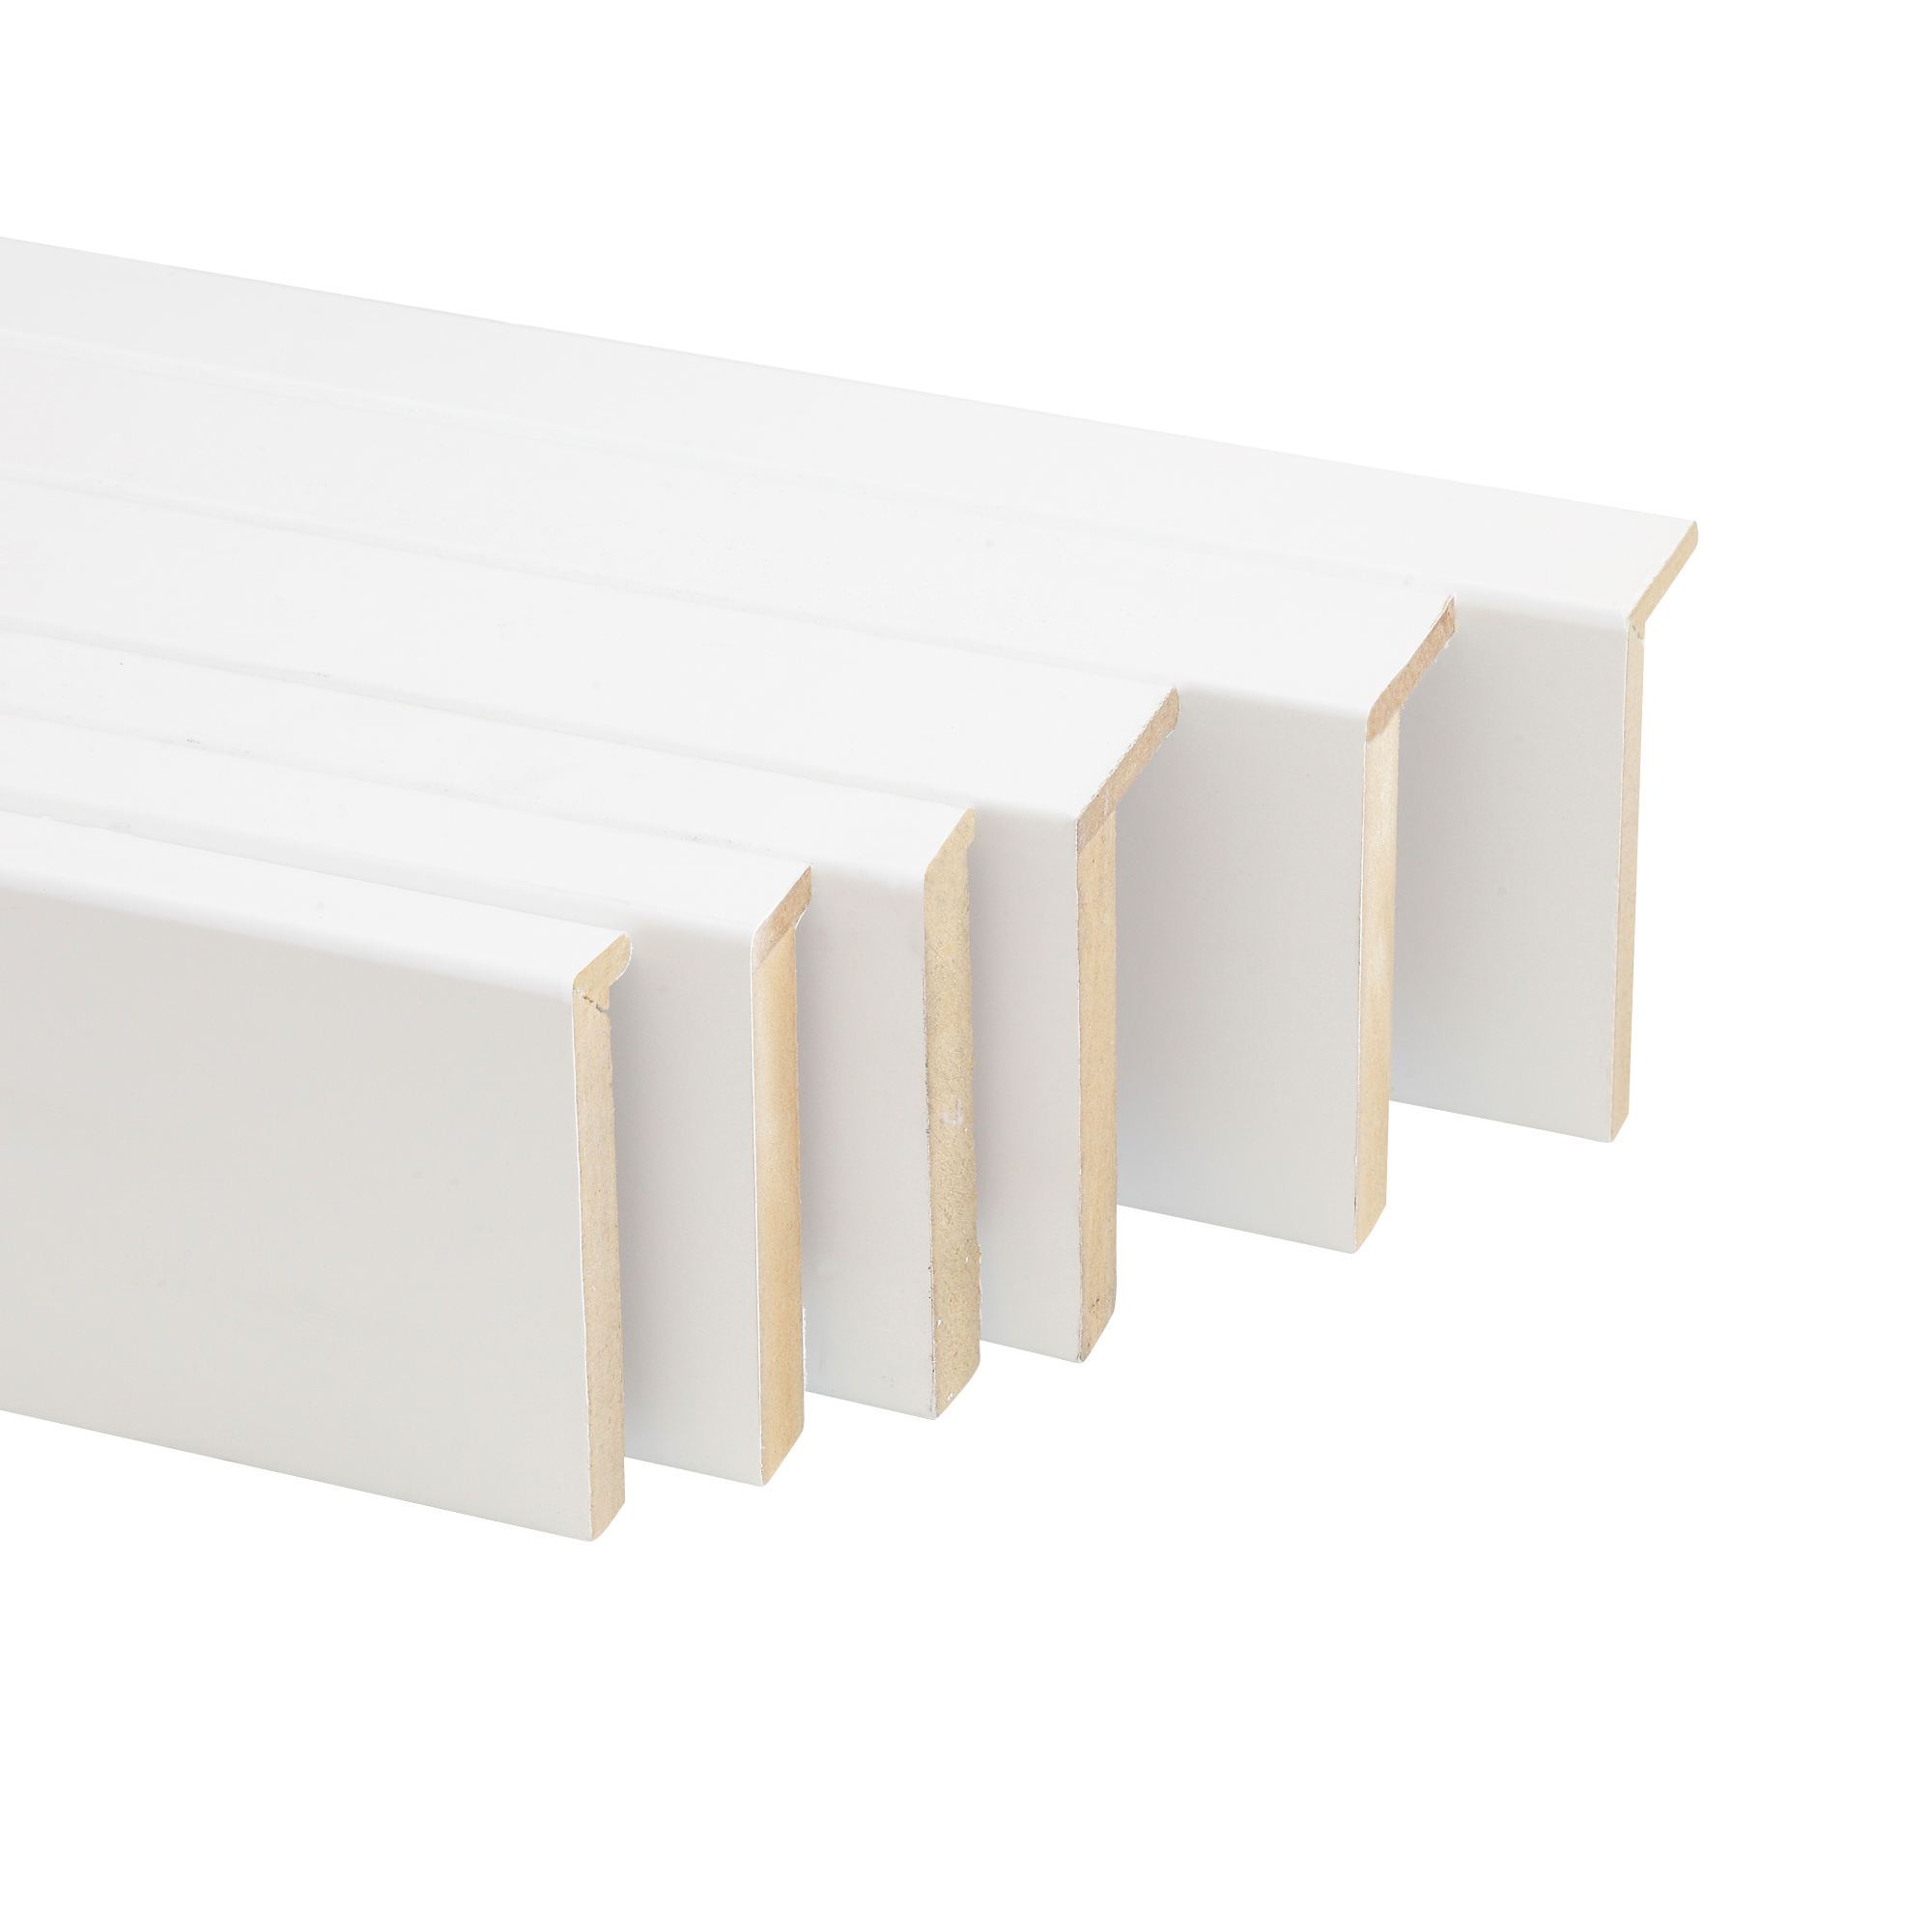 Kit de 6 tapetas en l de madera blanco 80 x 12-80 x 16 mm